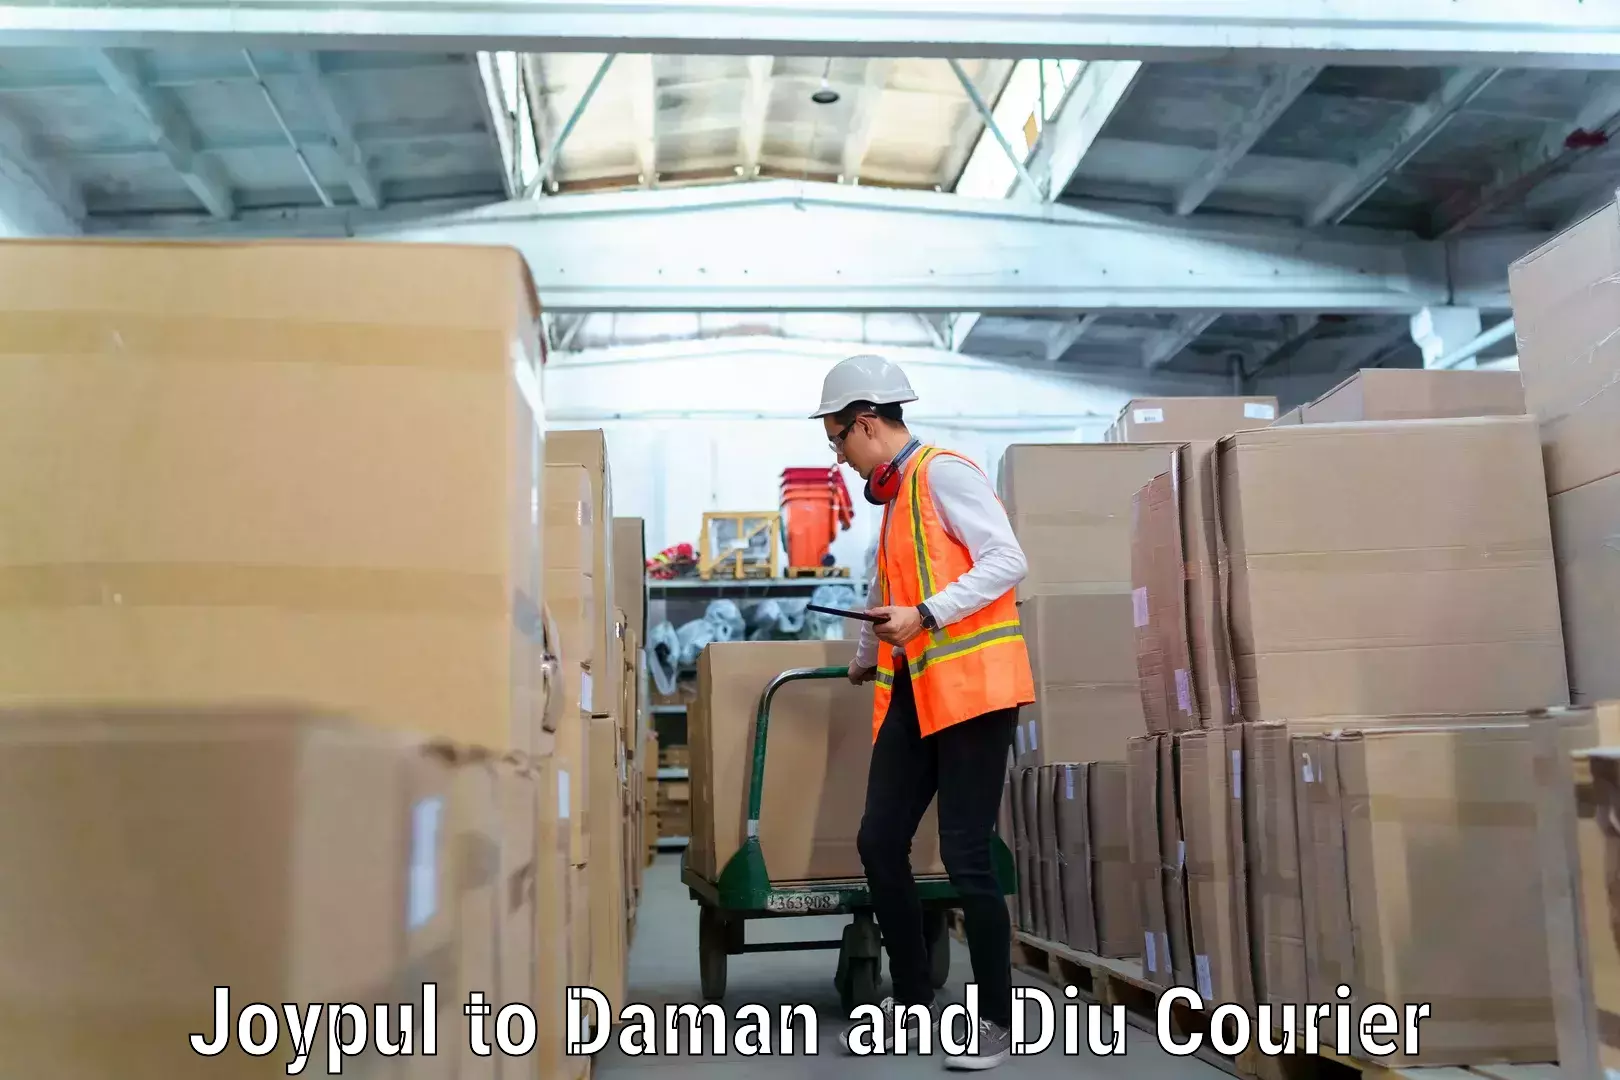 Furniture relocation experts Joypul to Daman and Diu